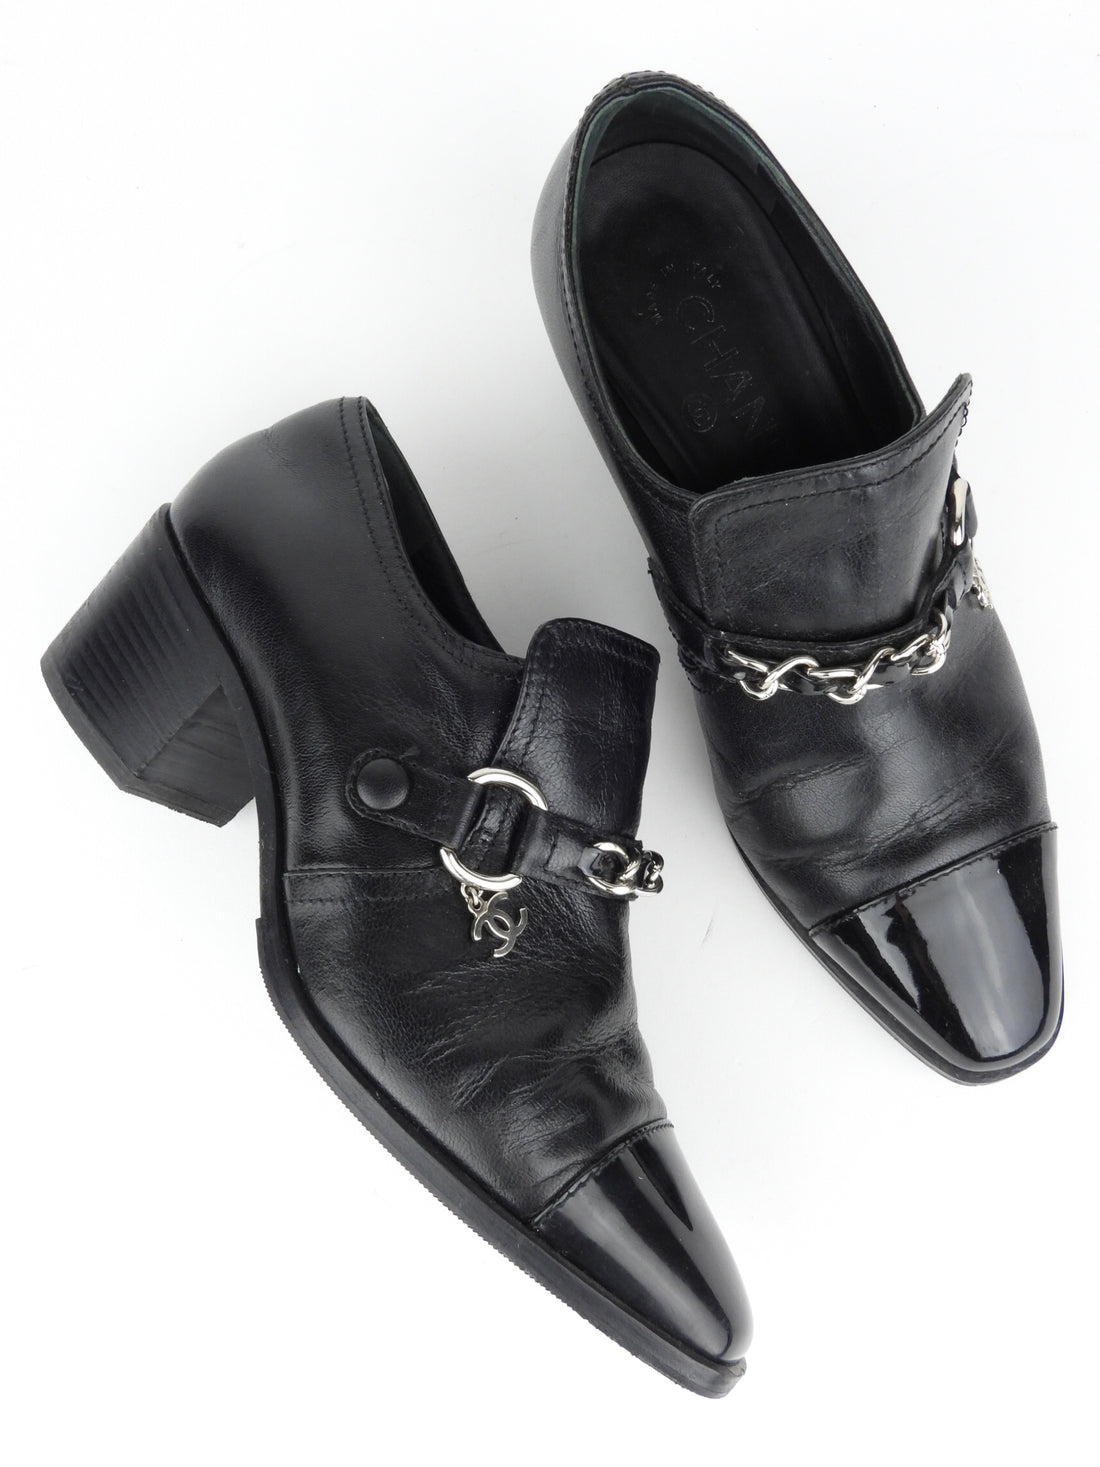 CHANEL Cap toe black CC logo black ankle boot 37 Good  Condition!💯%Authentic!